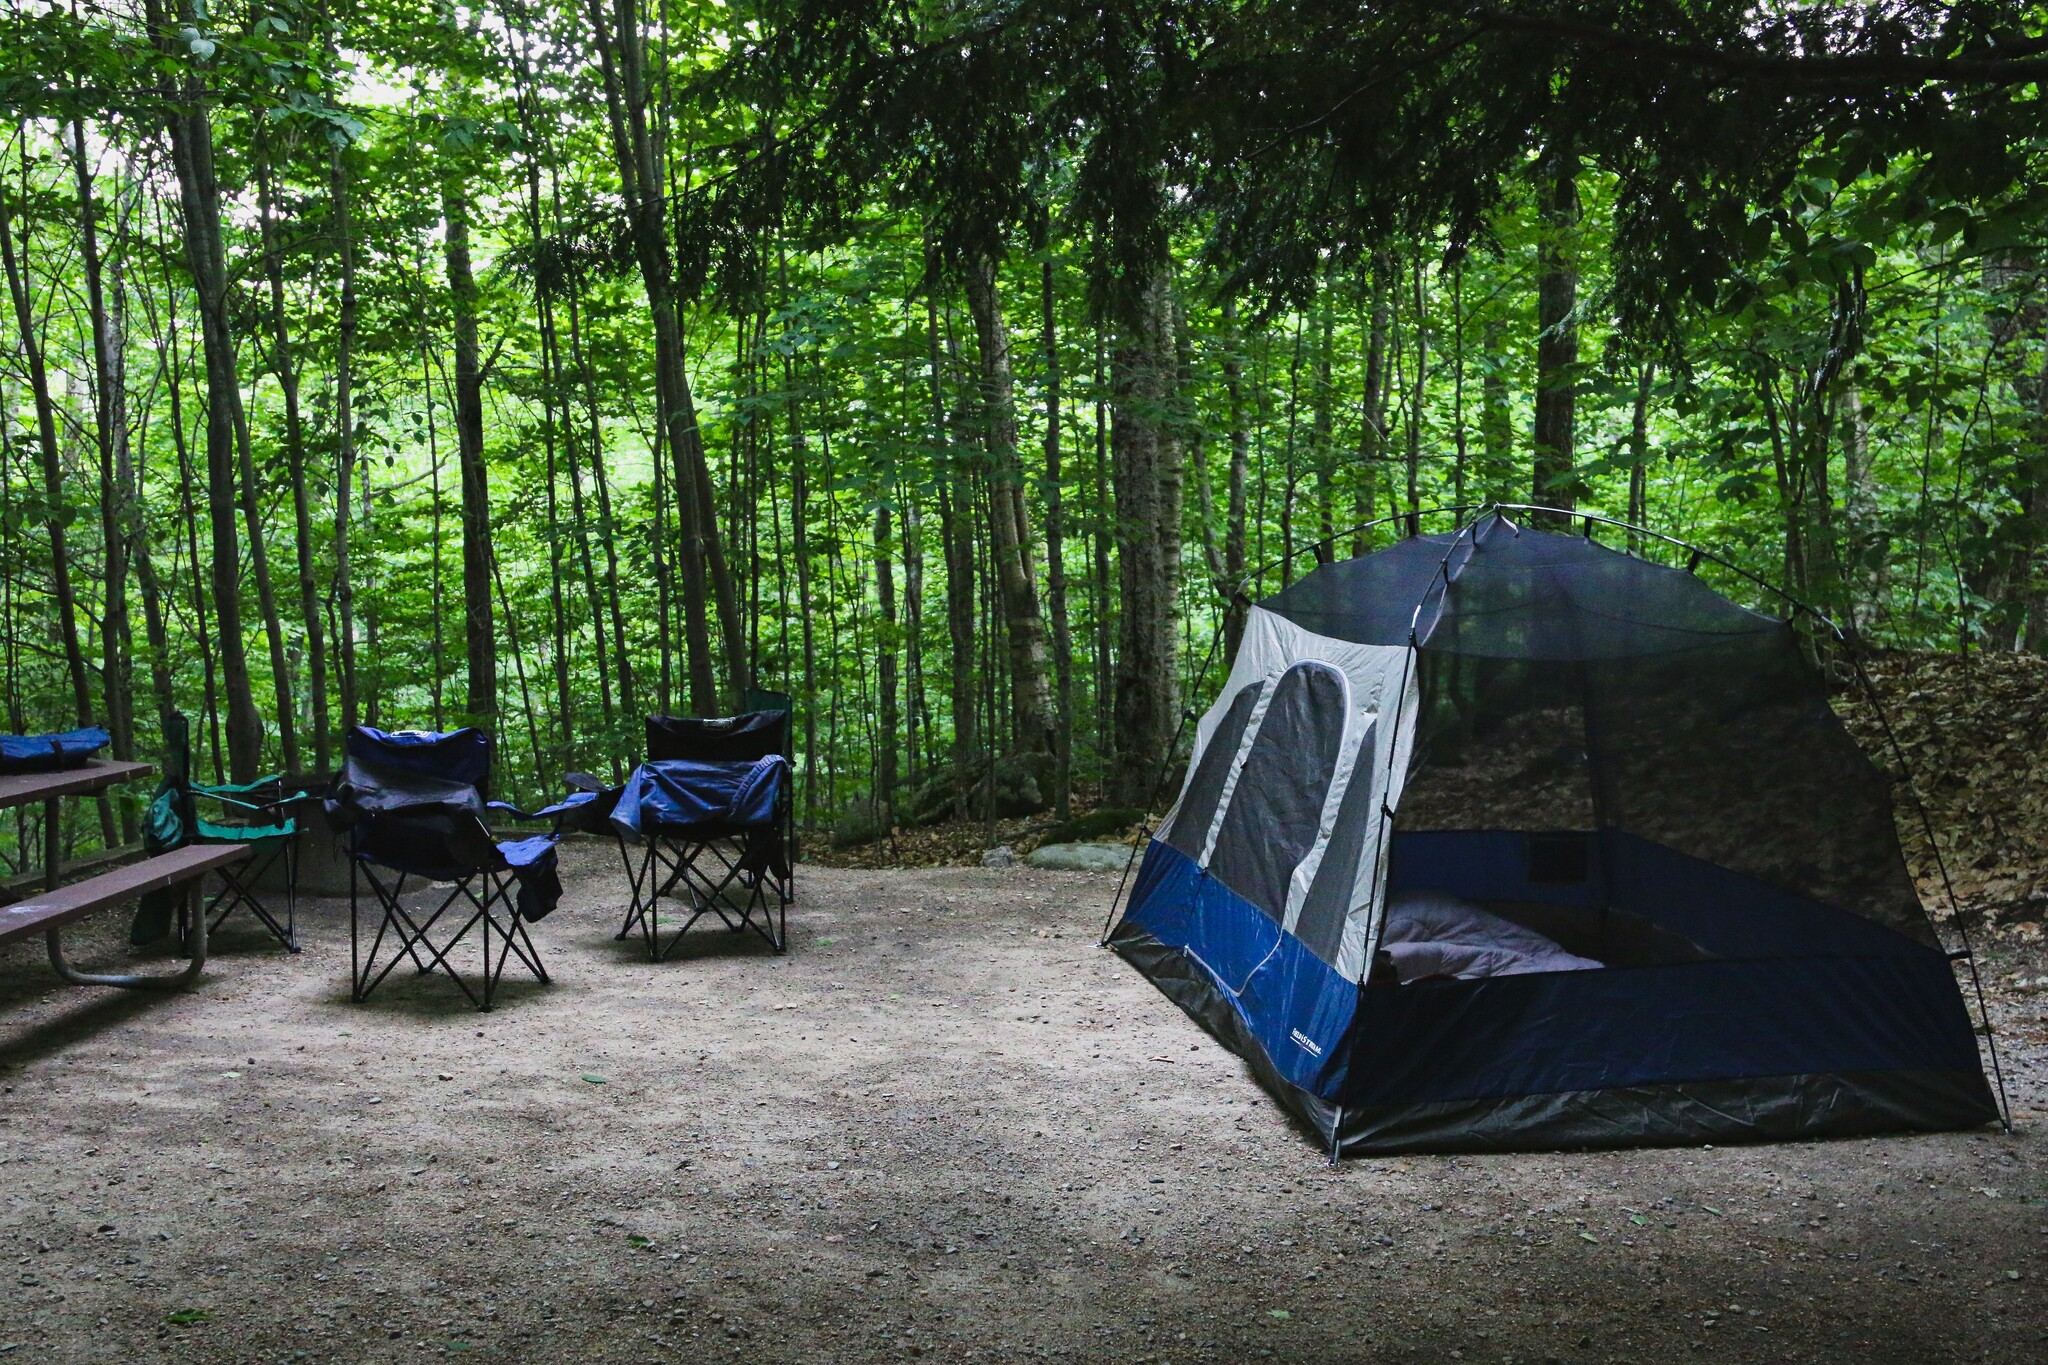 Beat the Heat this camping season